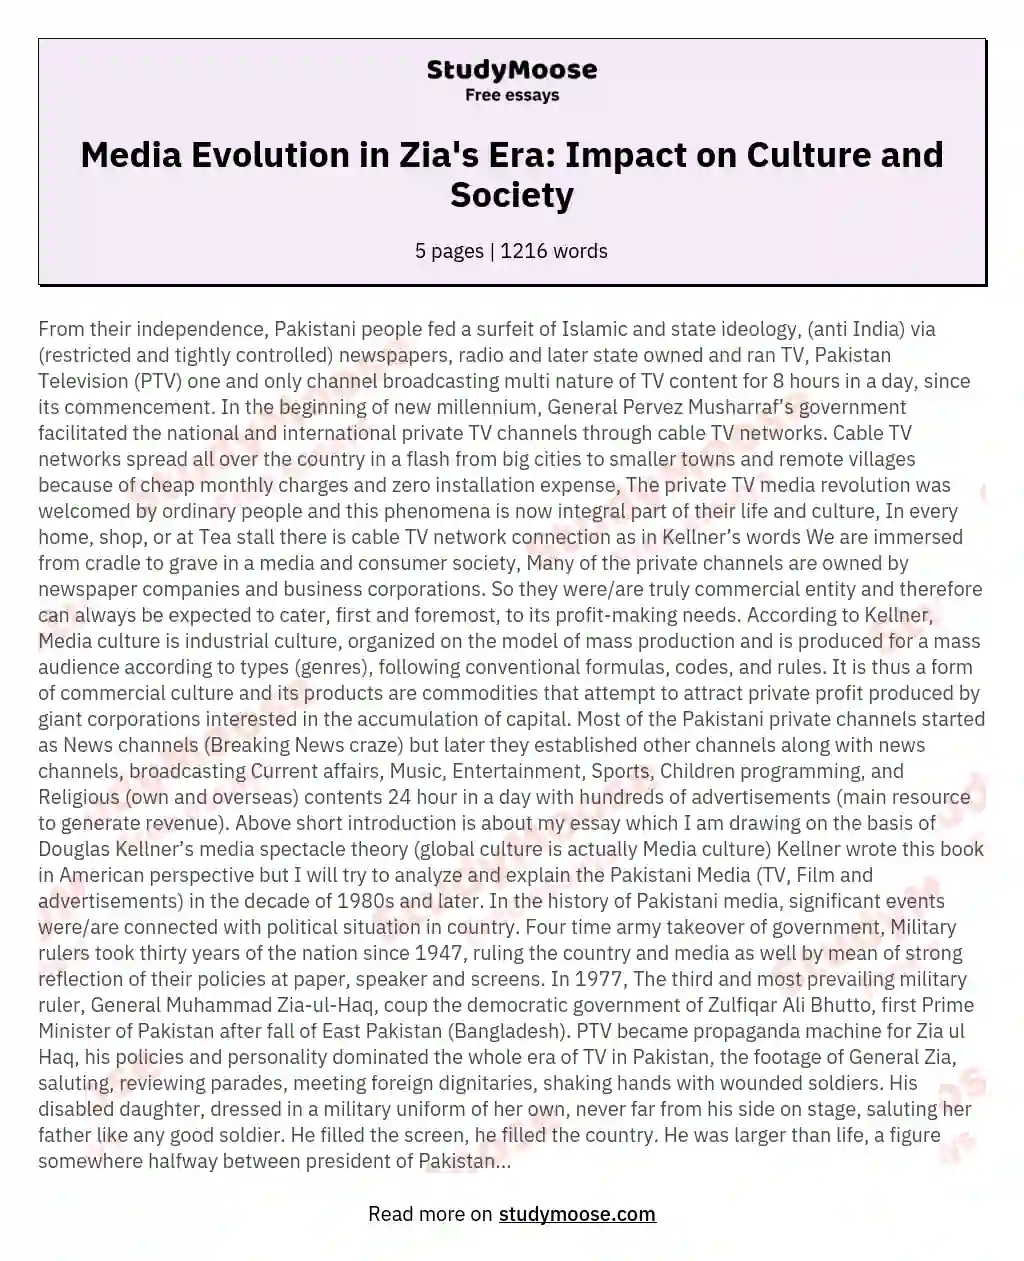 Media Evolution in Zia's Era: Impact on Culture and Society essay